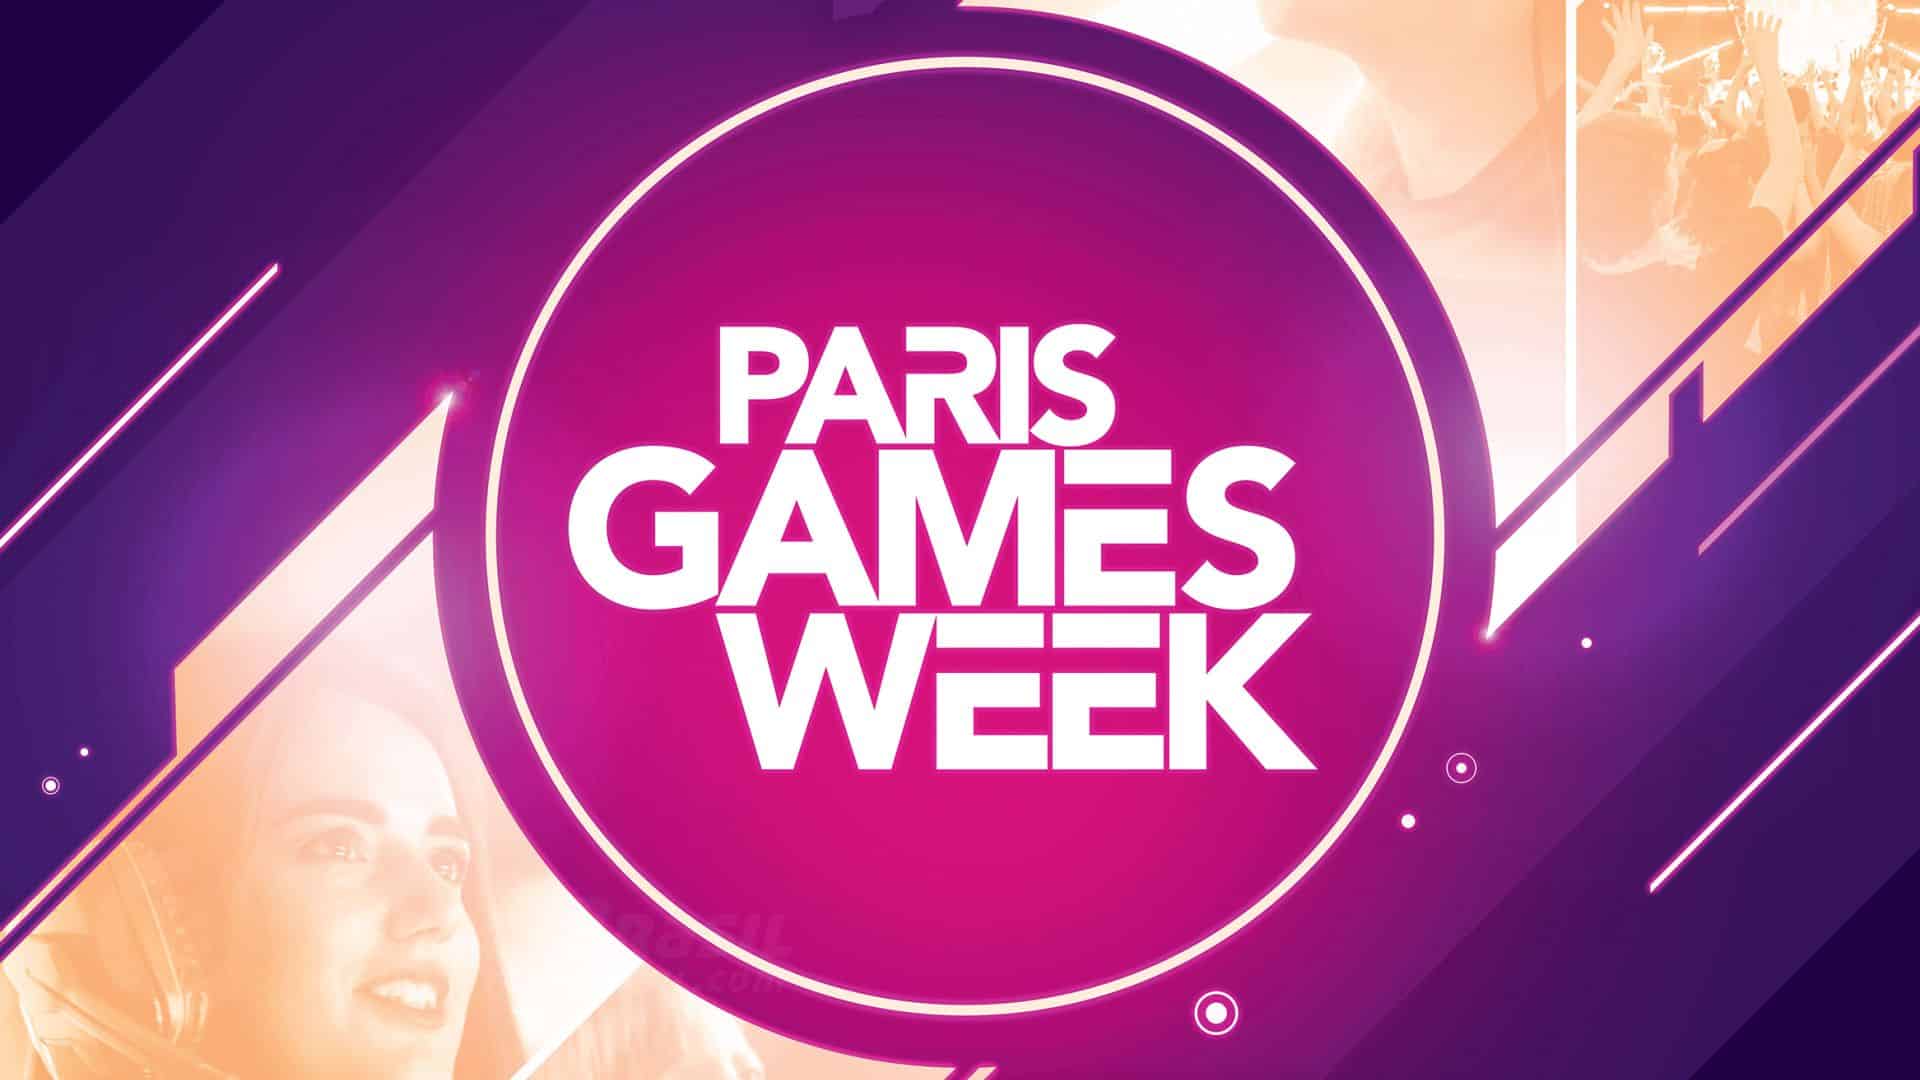 Férias galácticas | gato galactico | paris games week 2020 também está cancelada | d240362f paris games week scrn07052020 | gato galactico